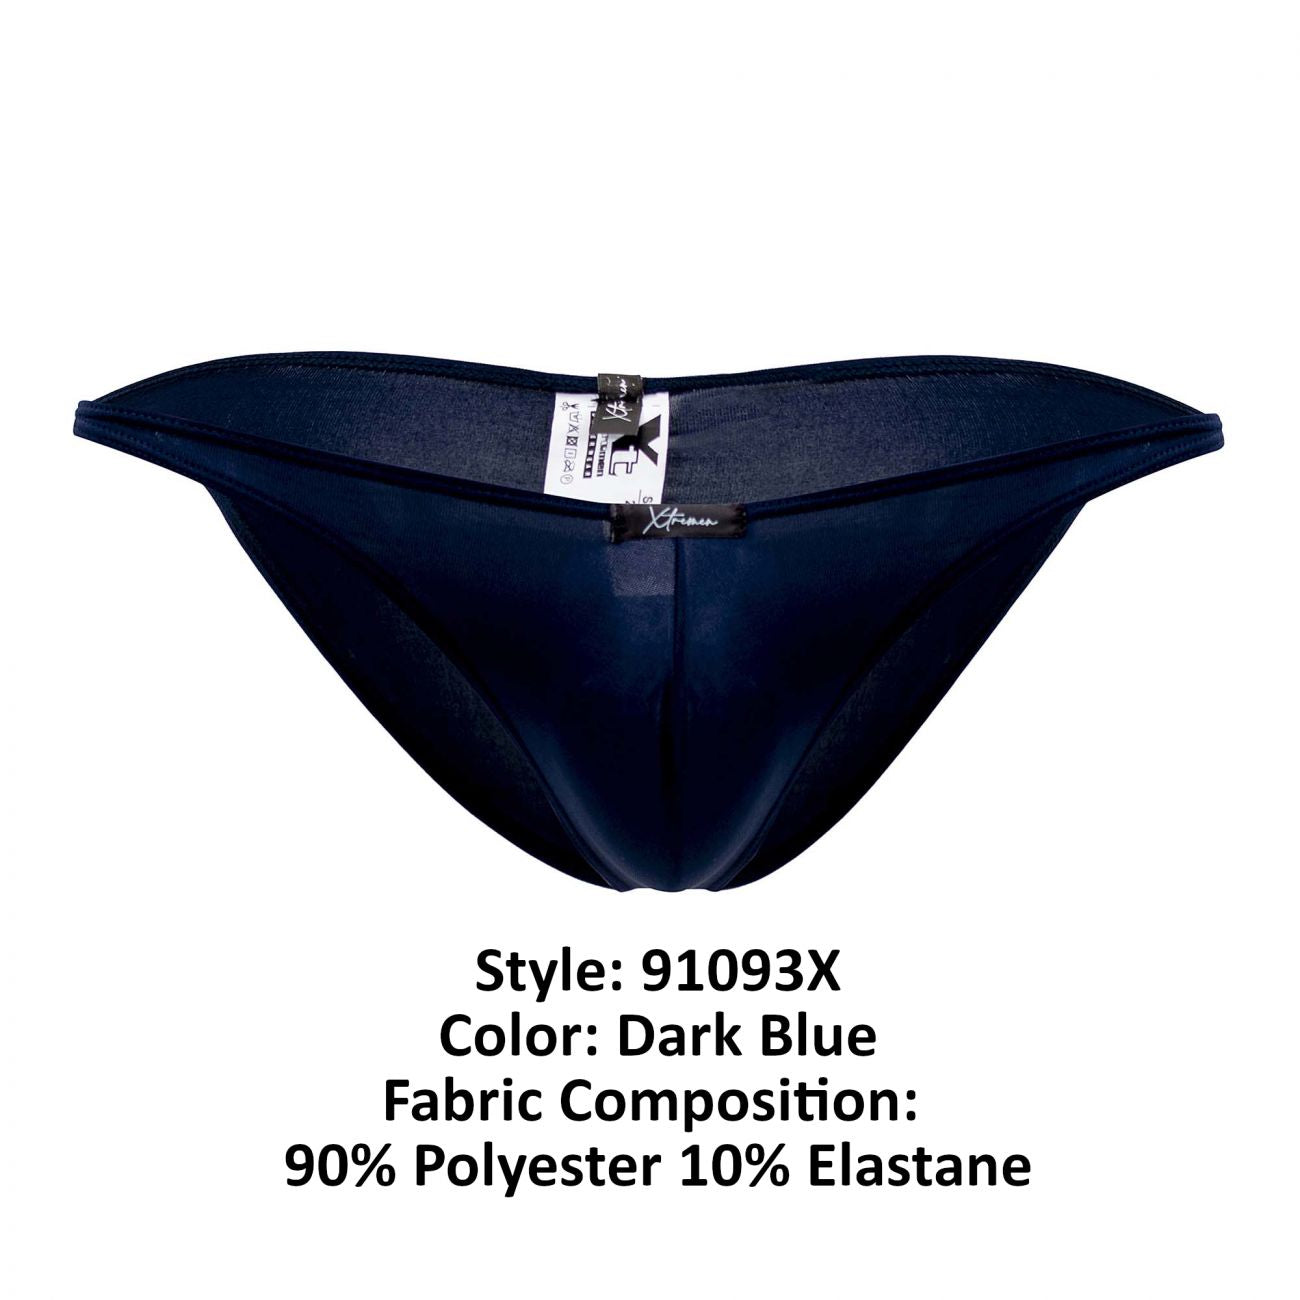 Xtremen 91093X Microfiber Bikini Dark Blue Plus Sizes